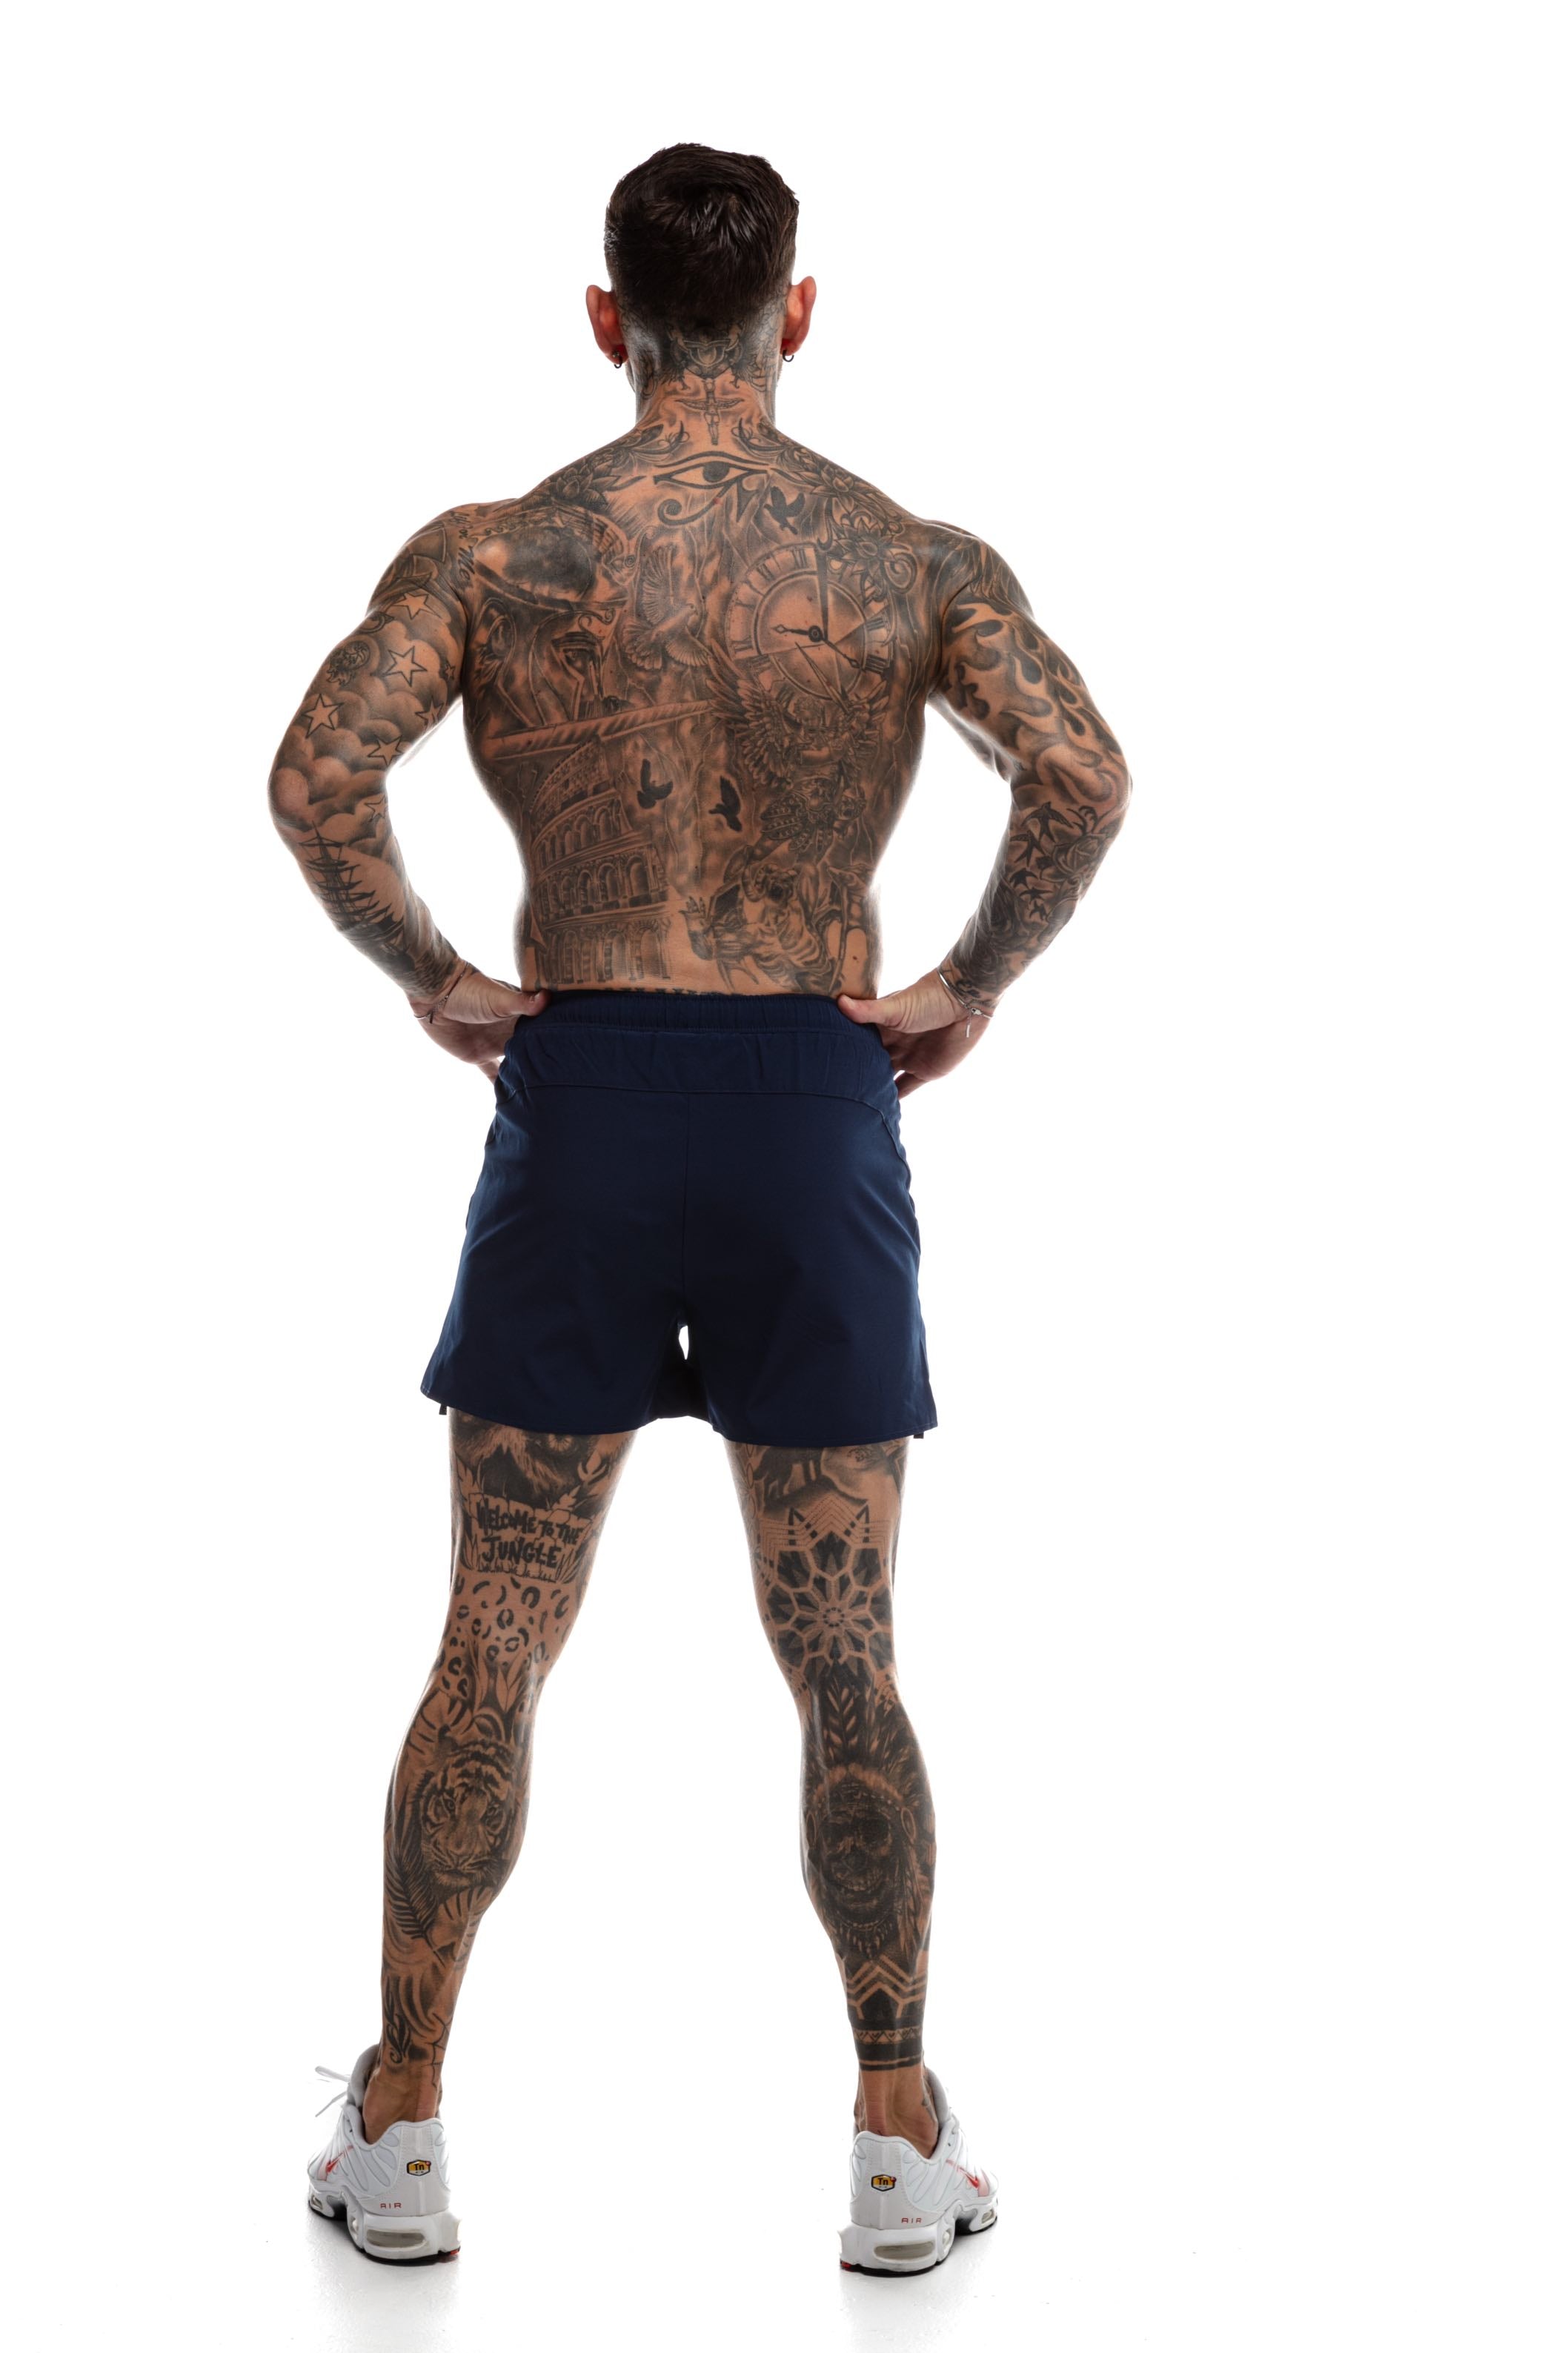 GymFreak Mens Fusion Shorts - Navy Blue - 3.5 inch